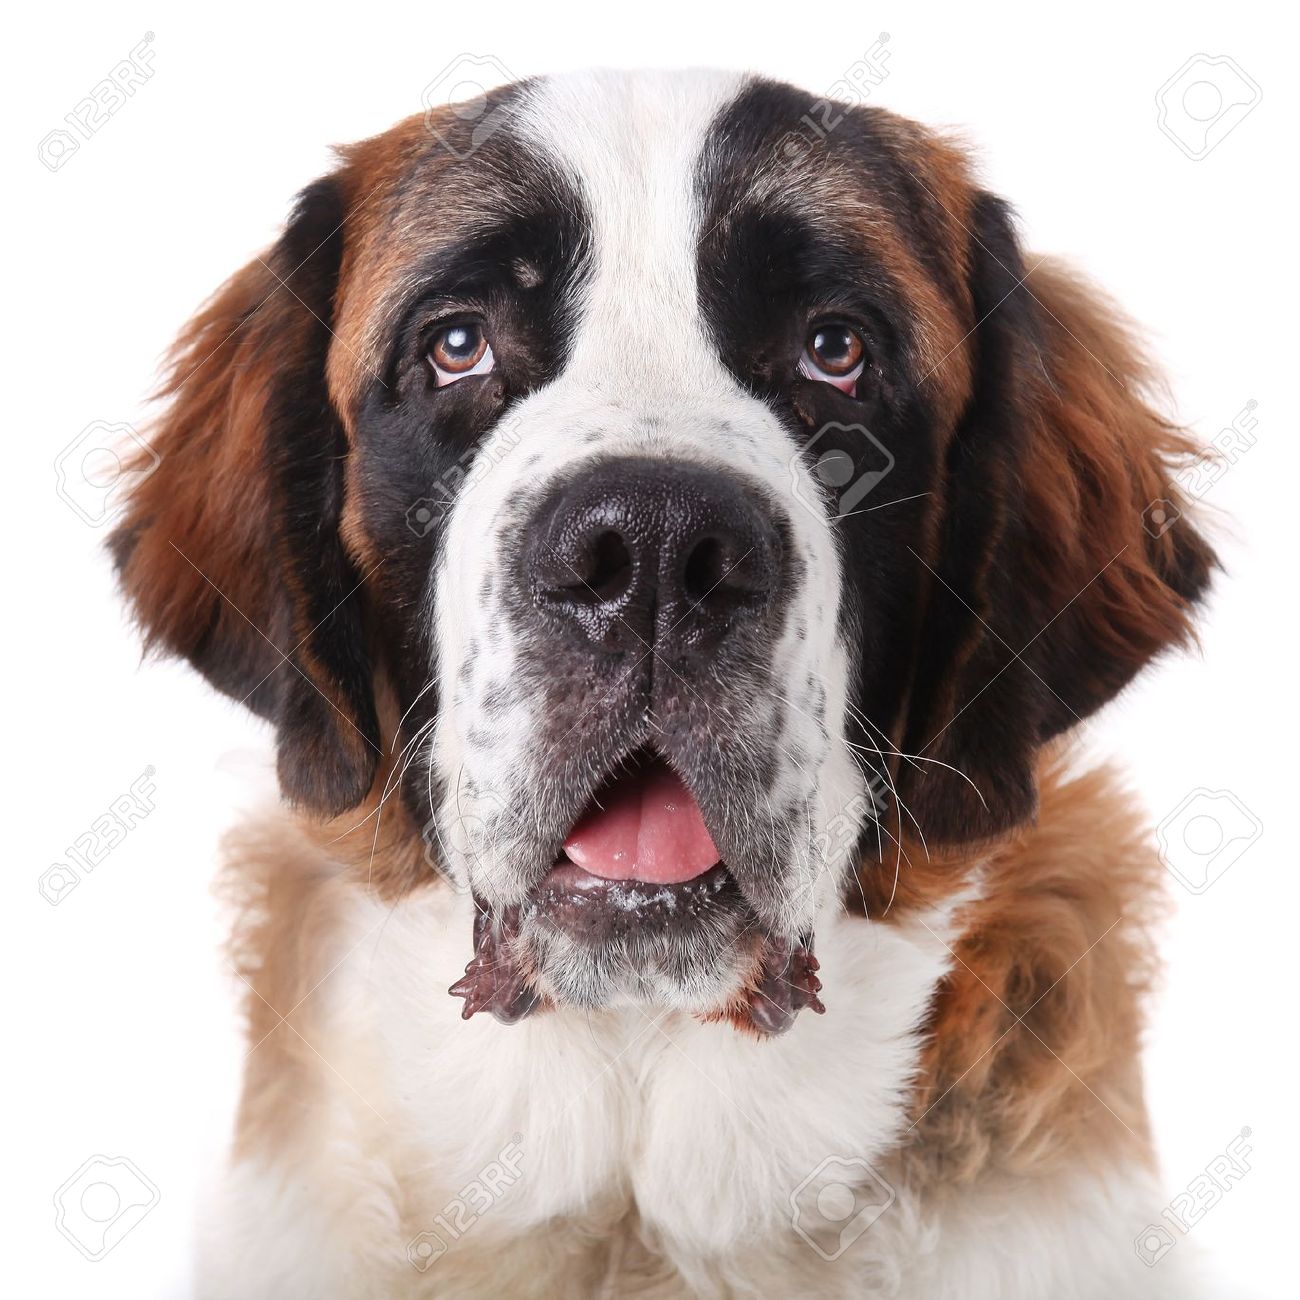 Adorable Saint Bernard Dog Face Picture